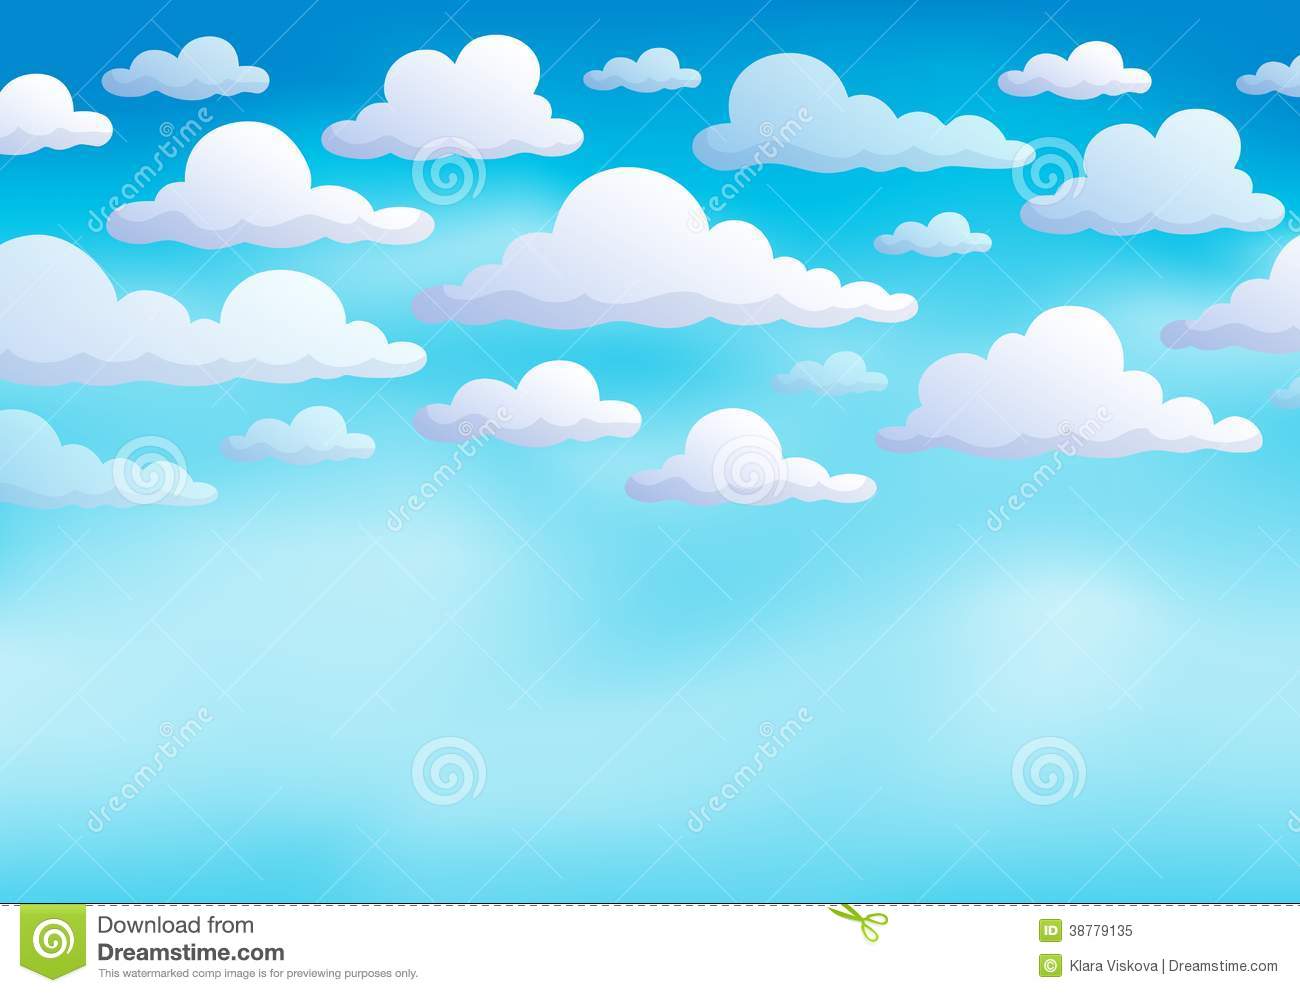 cloud clipart background - photo #32